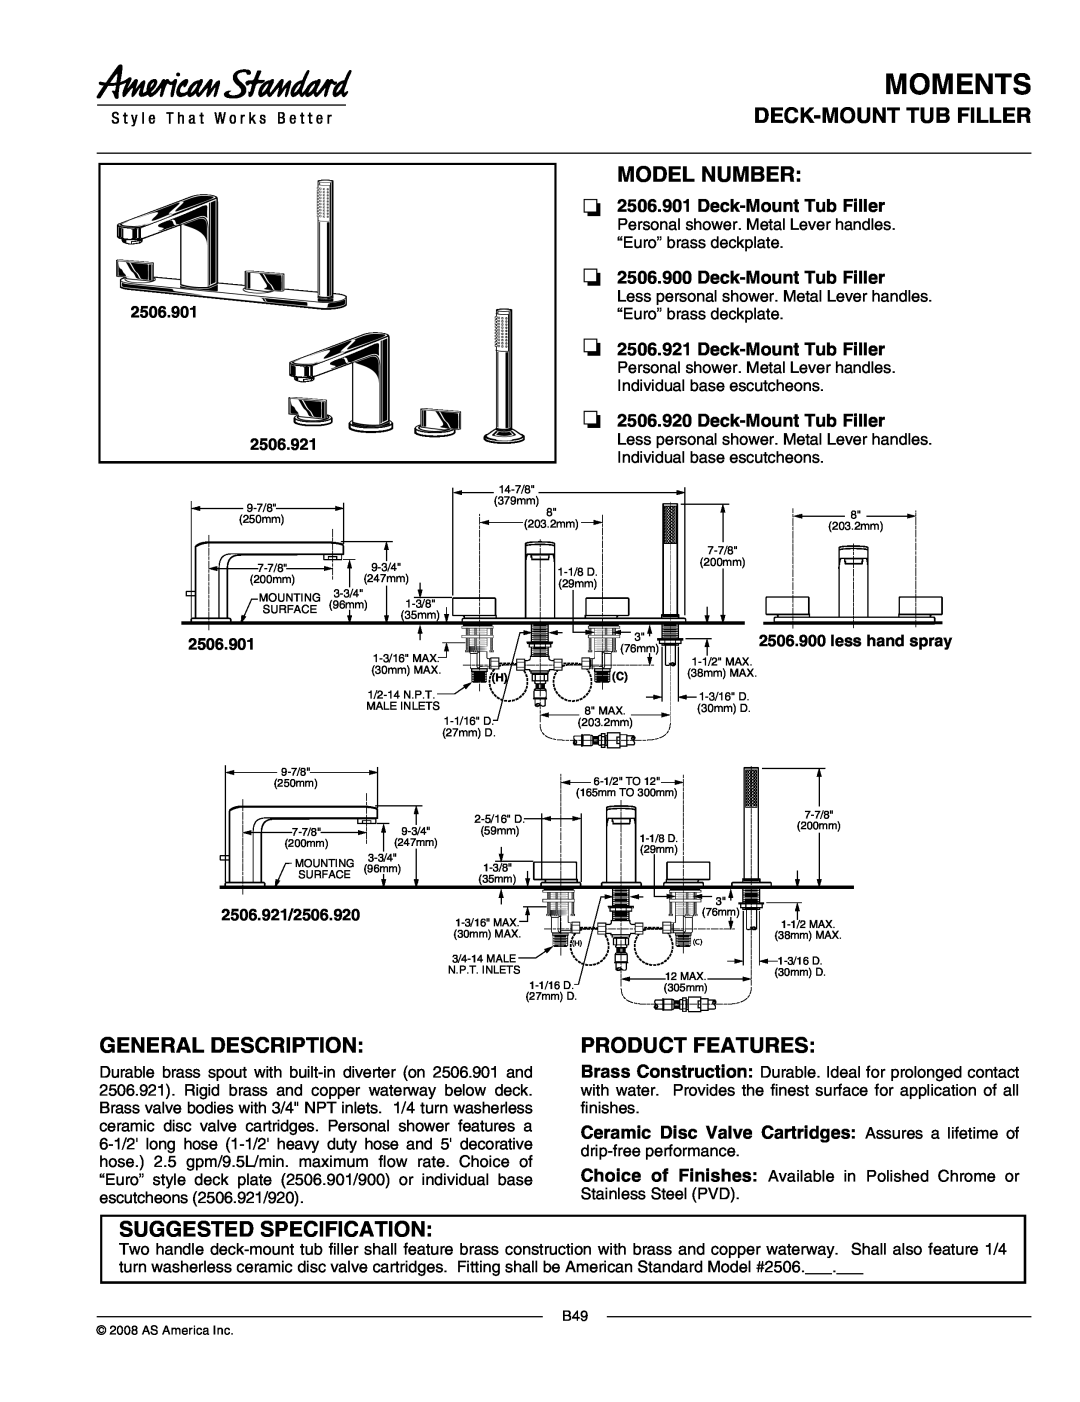 American Standard 2506.920 manual Moments, Deck-Mounttub Filler, Model Number, General Description, Product Features 